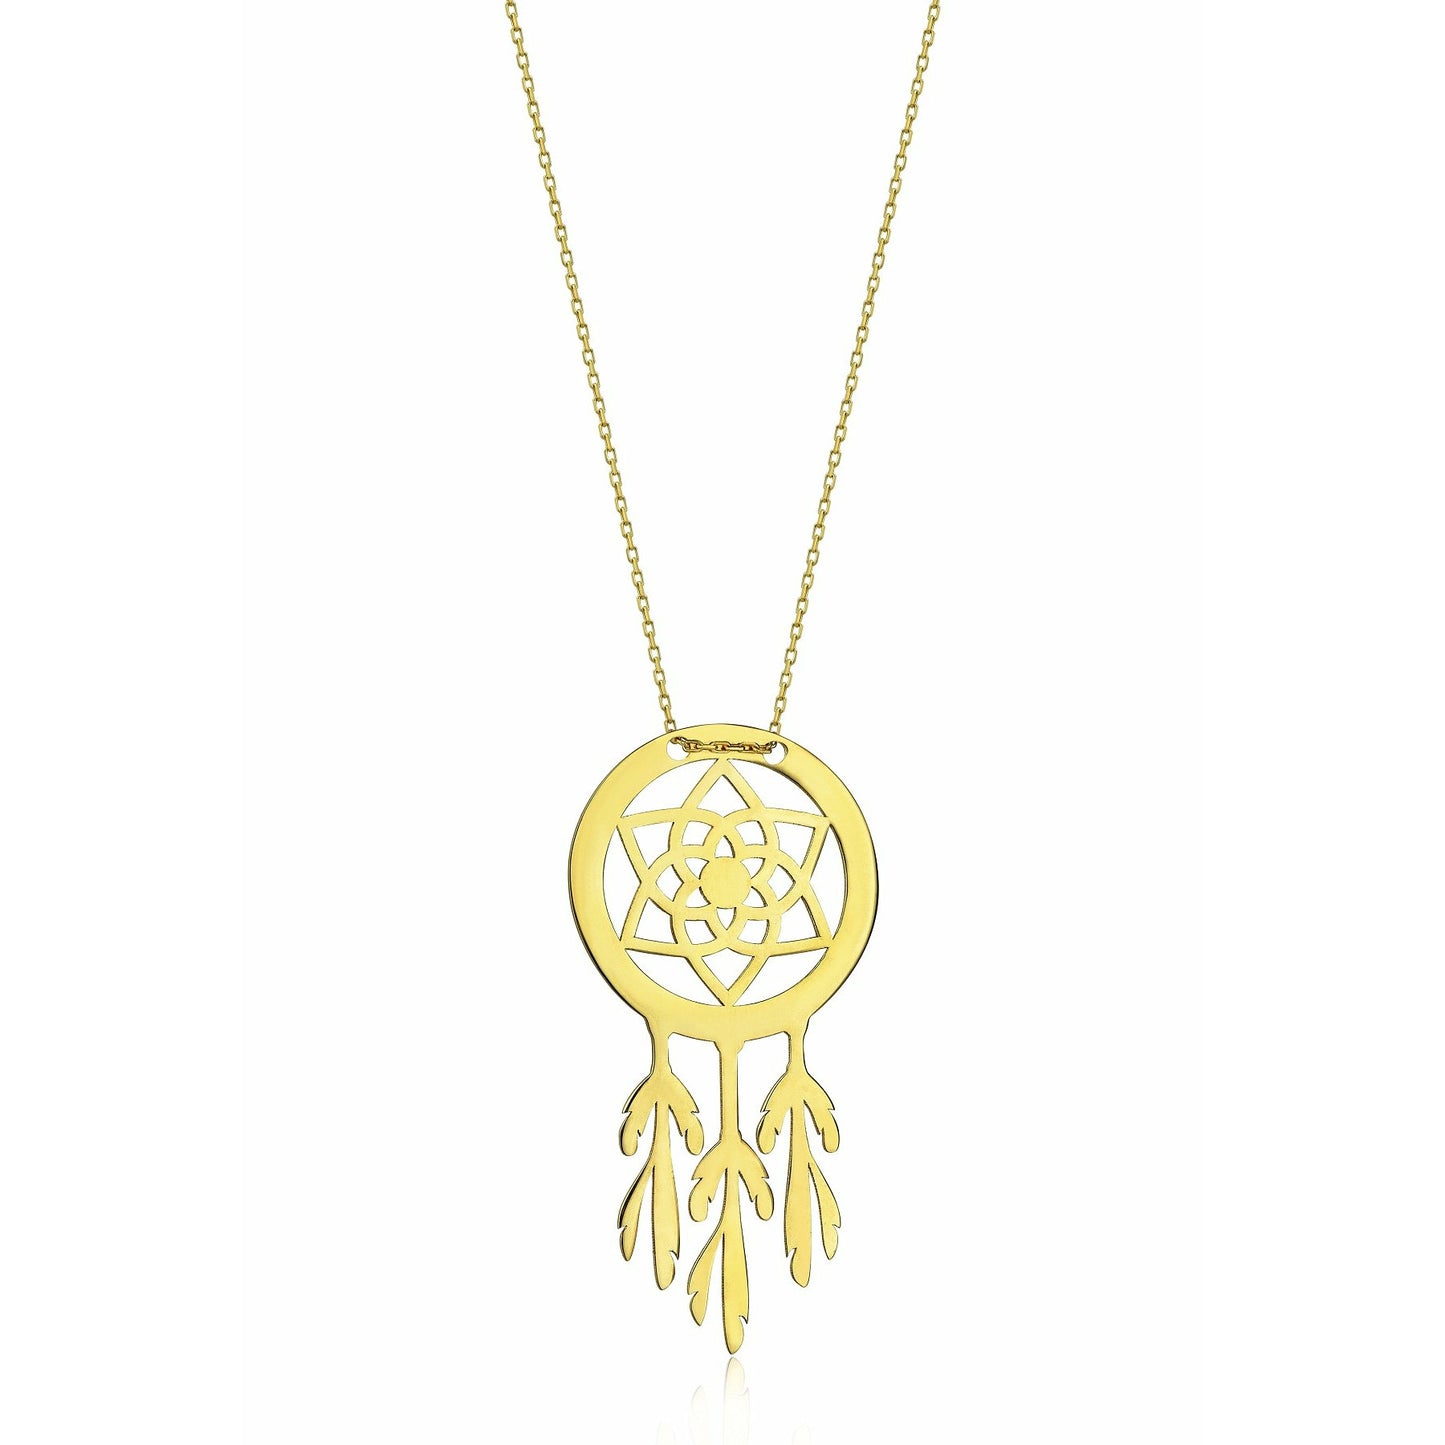 Special Design Gift 14k Gold Dreamcatcher Necklace 